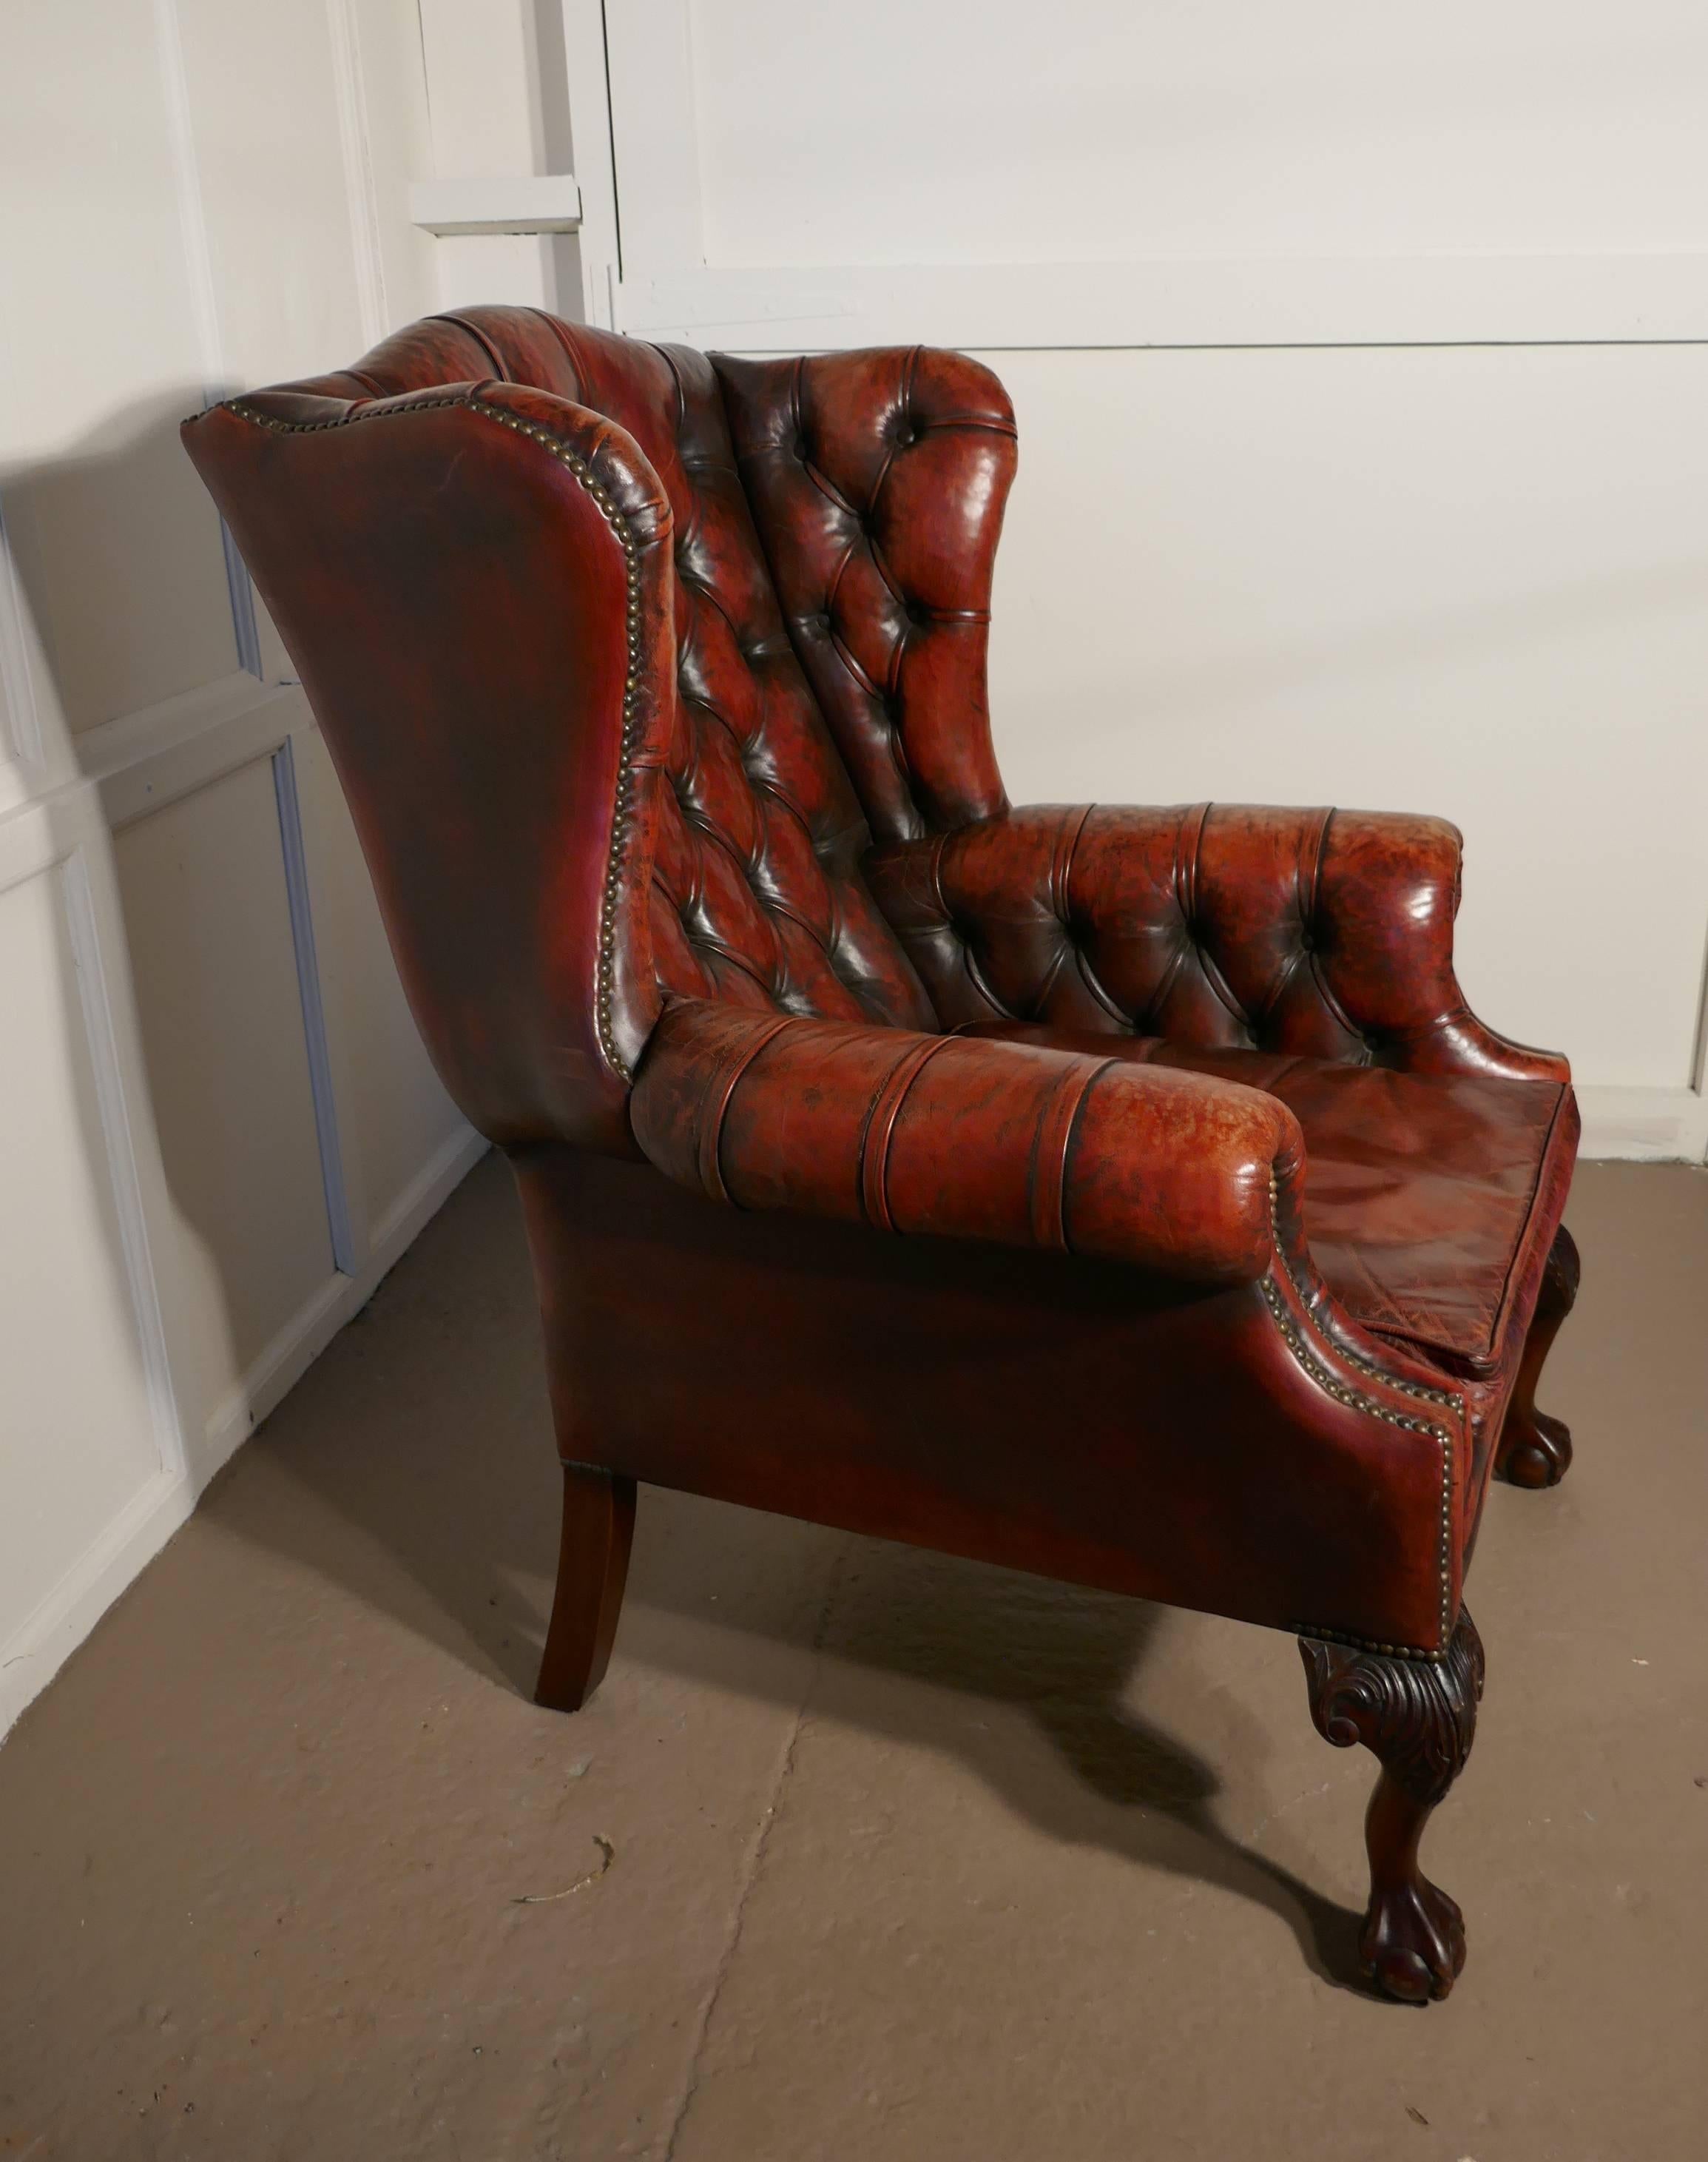 gentleman's leather chair